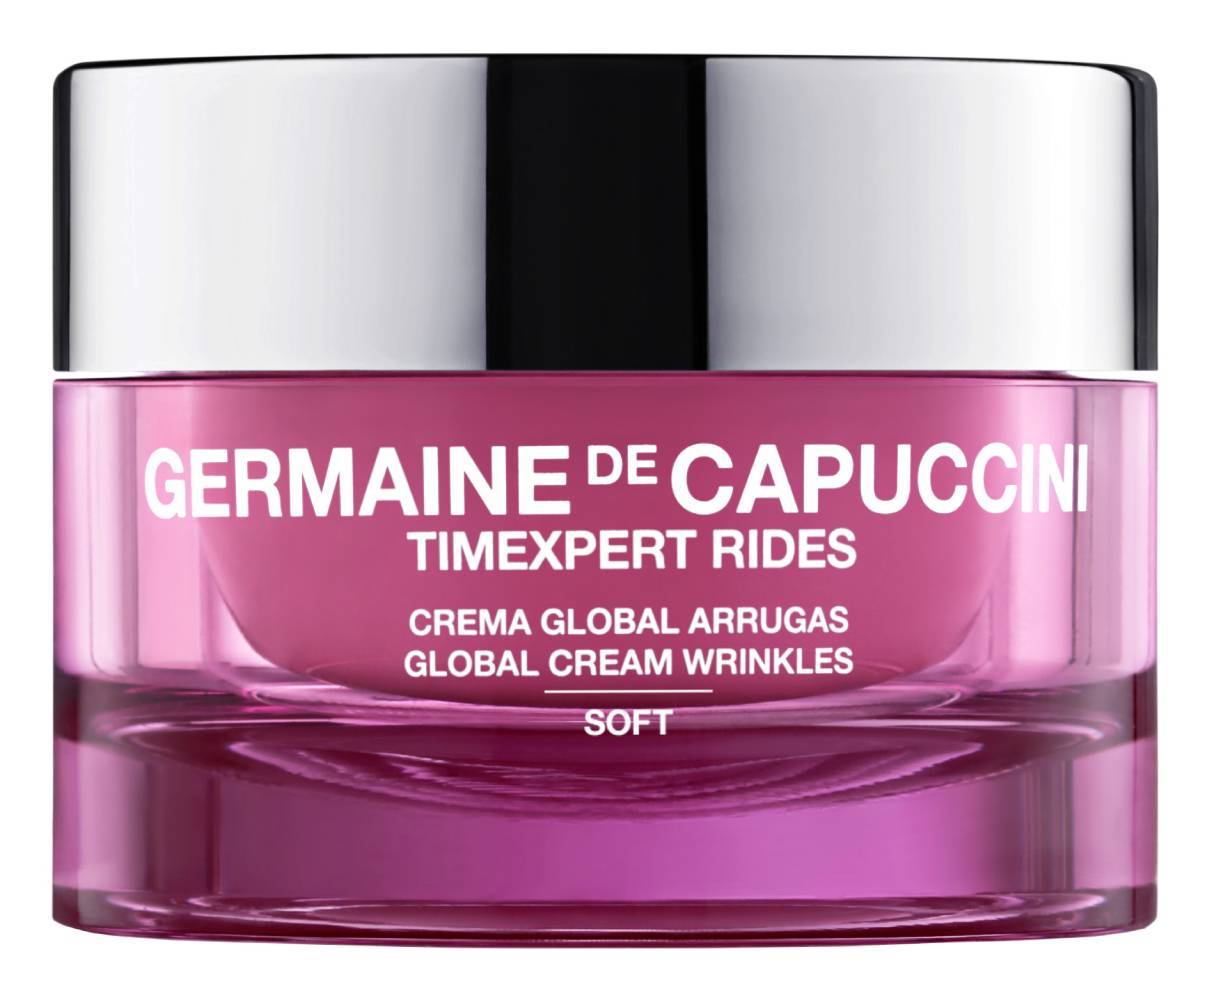 Germaine de Capuccini Timexpert Rides Global Cream Wrinkles Soft 50 ml